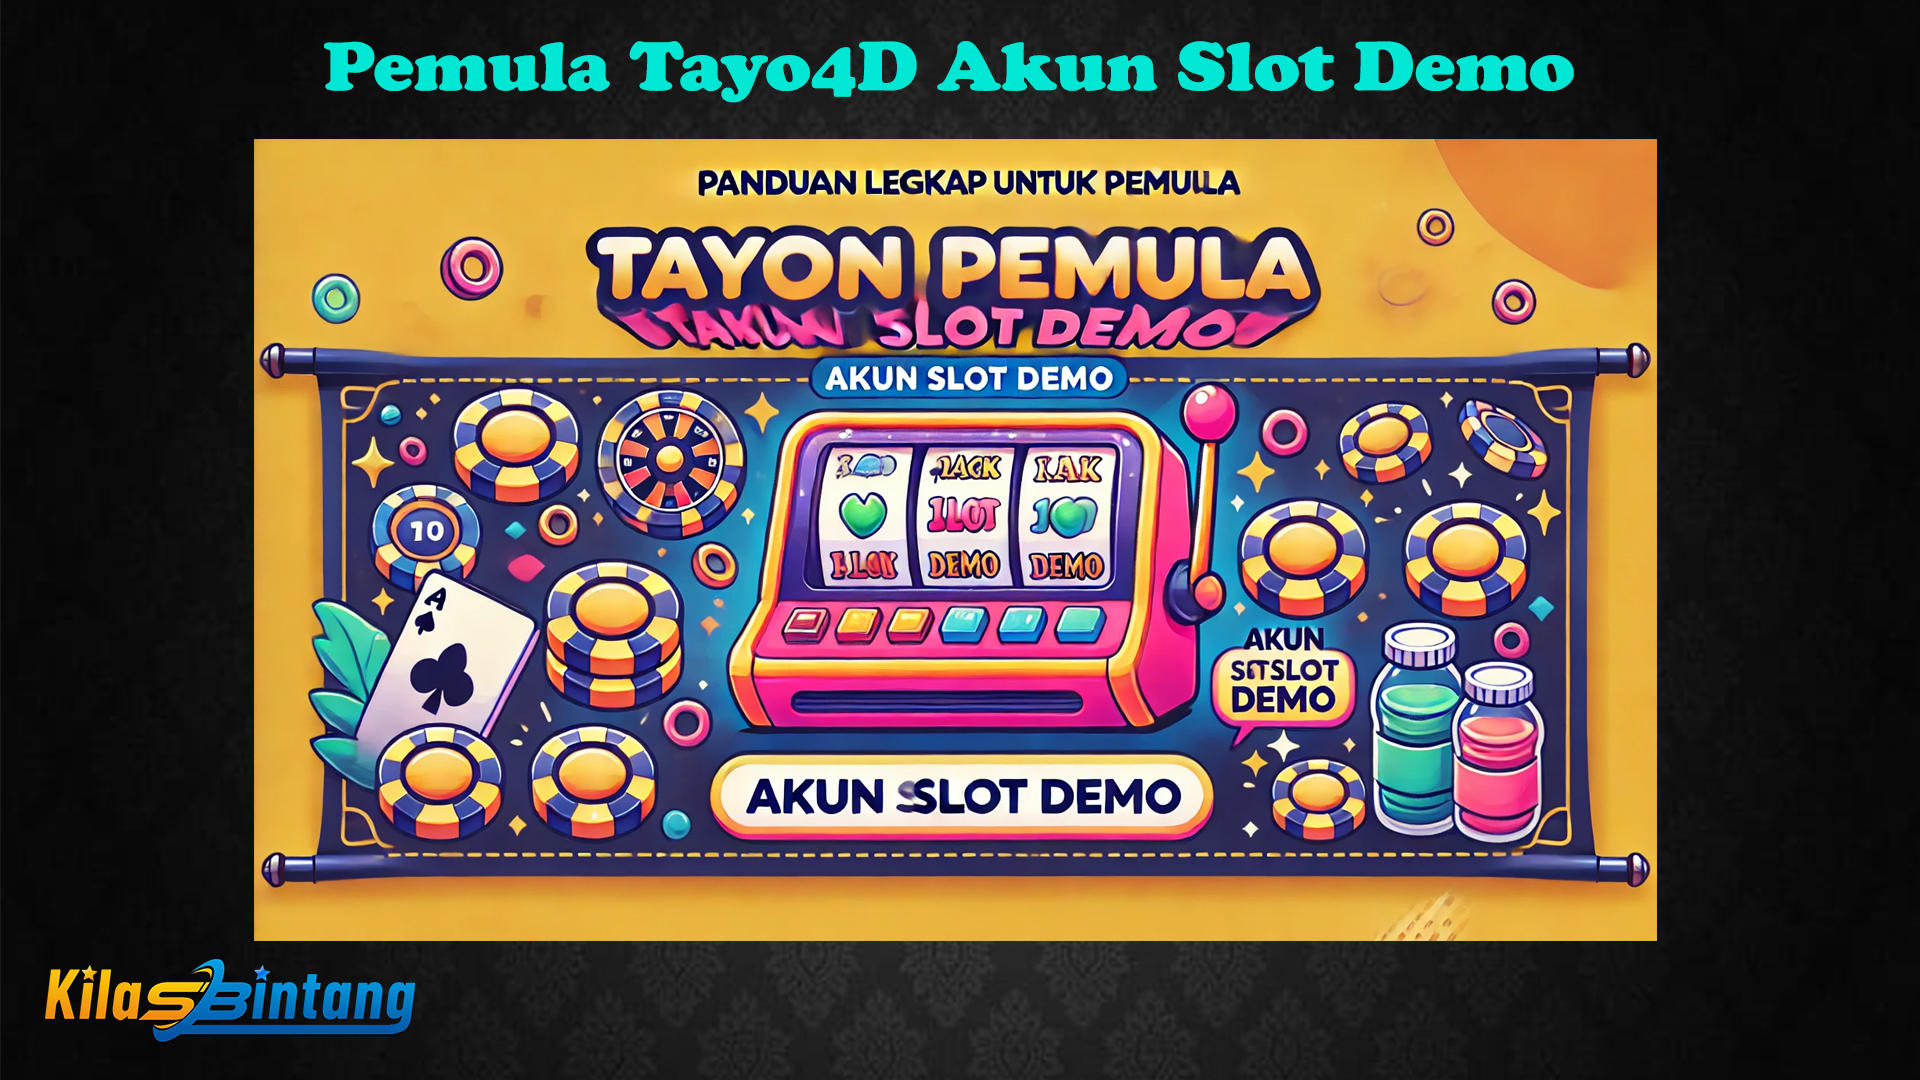 Panduan Lengkap untuk Pemula Tayo4D Akun Slot Demo